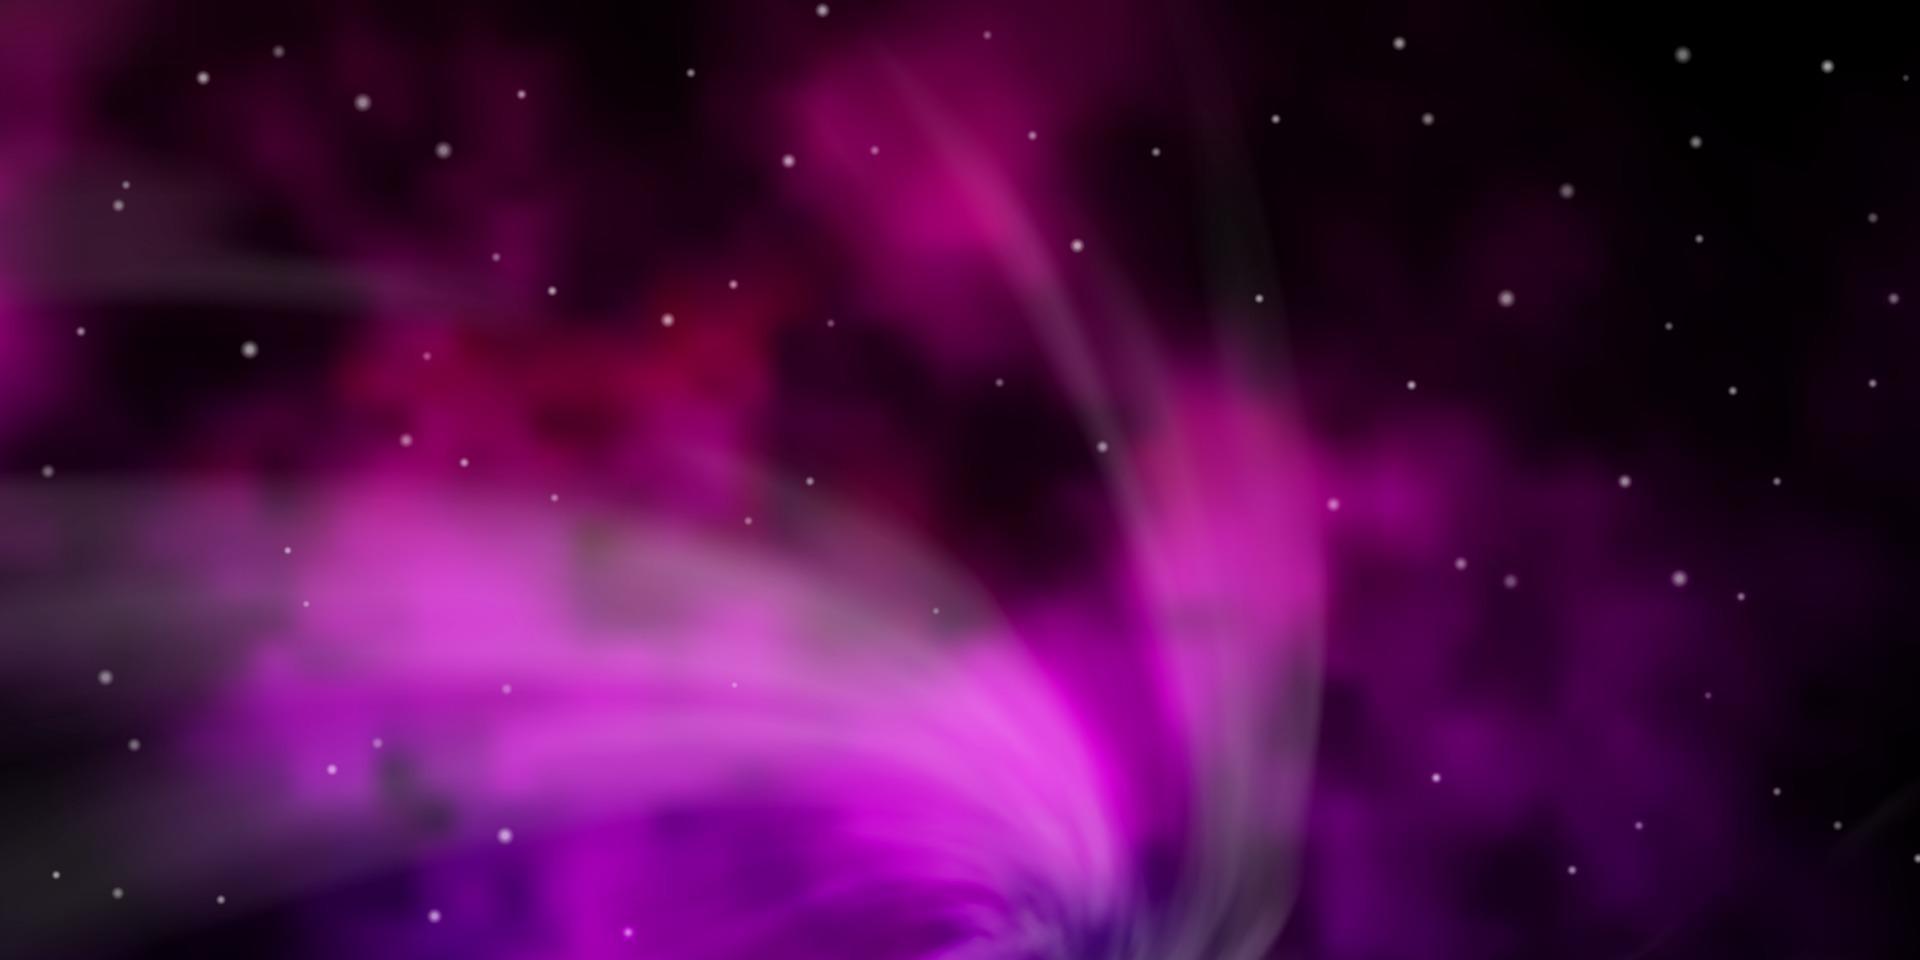 fundo vector rosa escuro com estrelas coloridas.